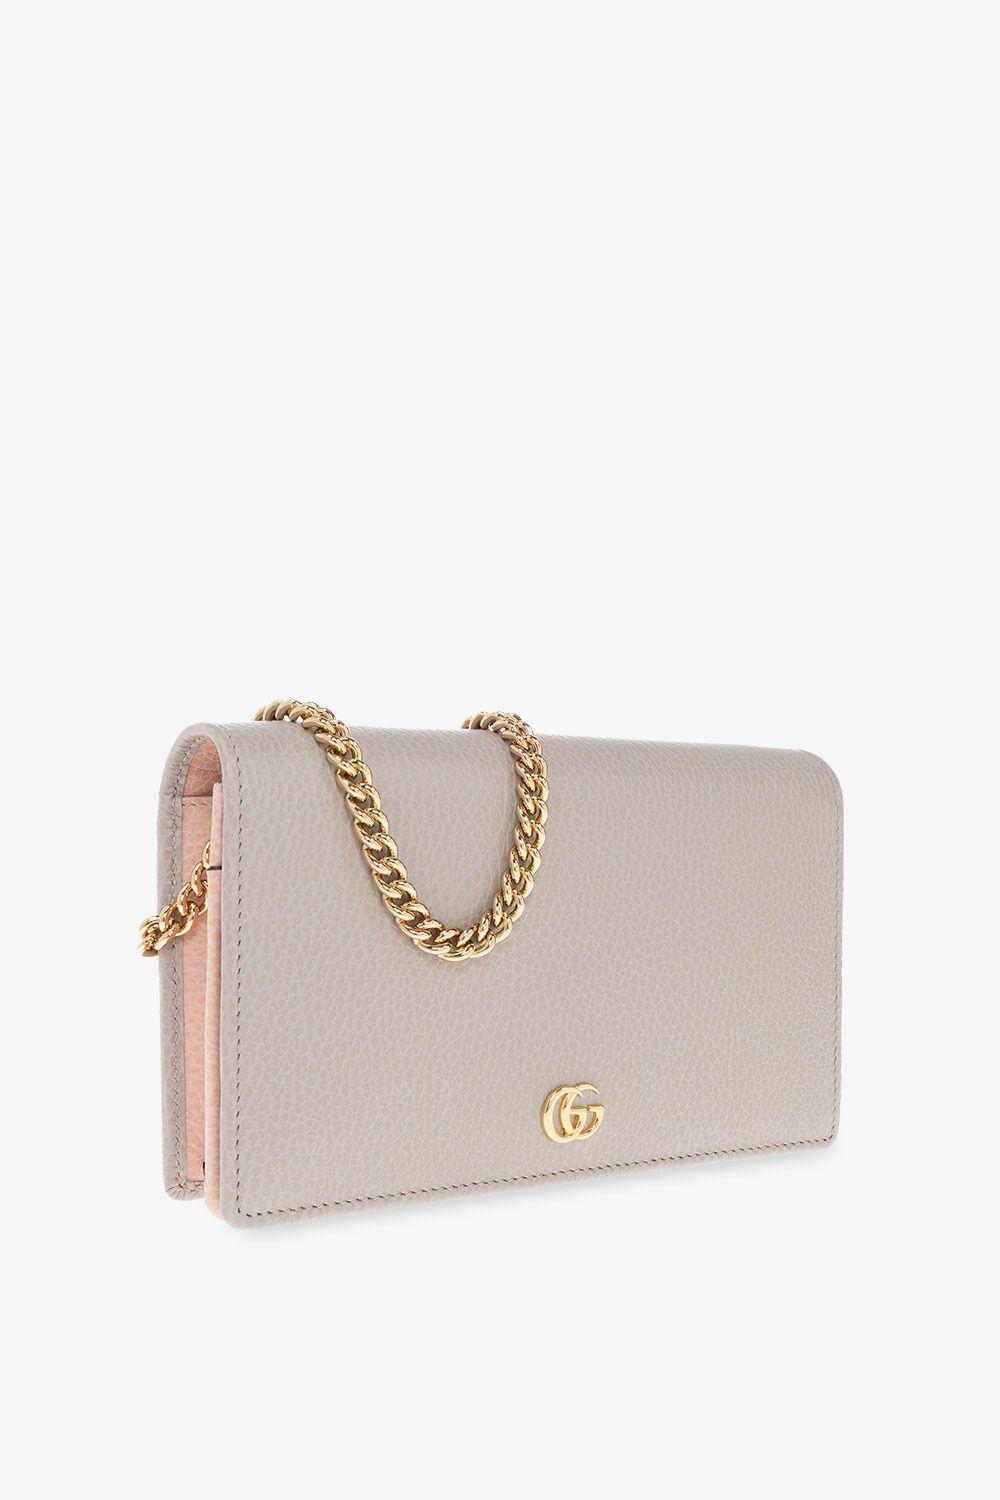 Gucci GG Marmont mini chain bag  Mini chain bag, Wallets for